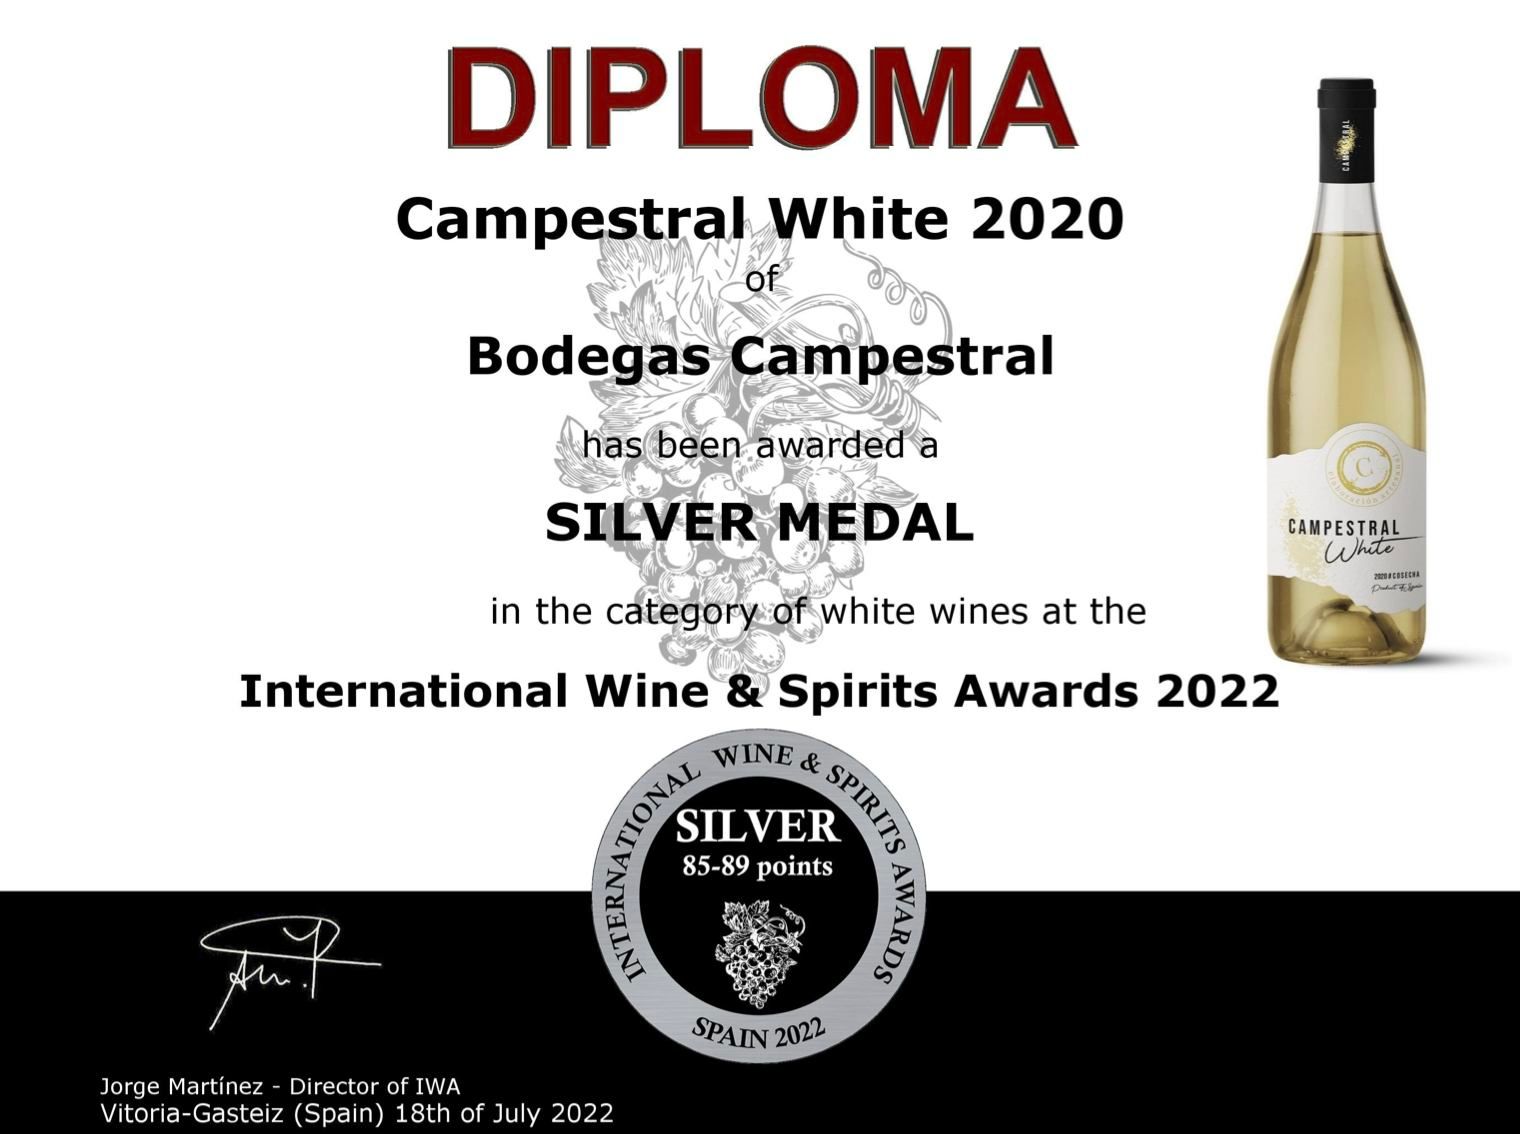 Diploma Medalla Campestral White